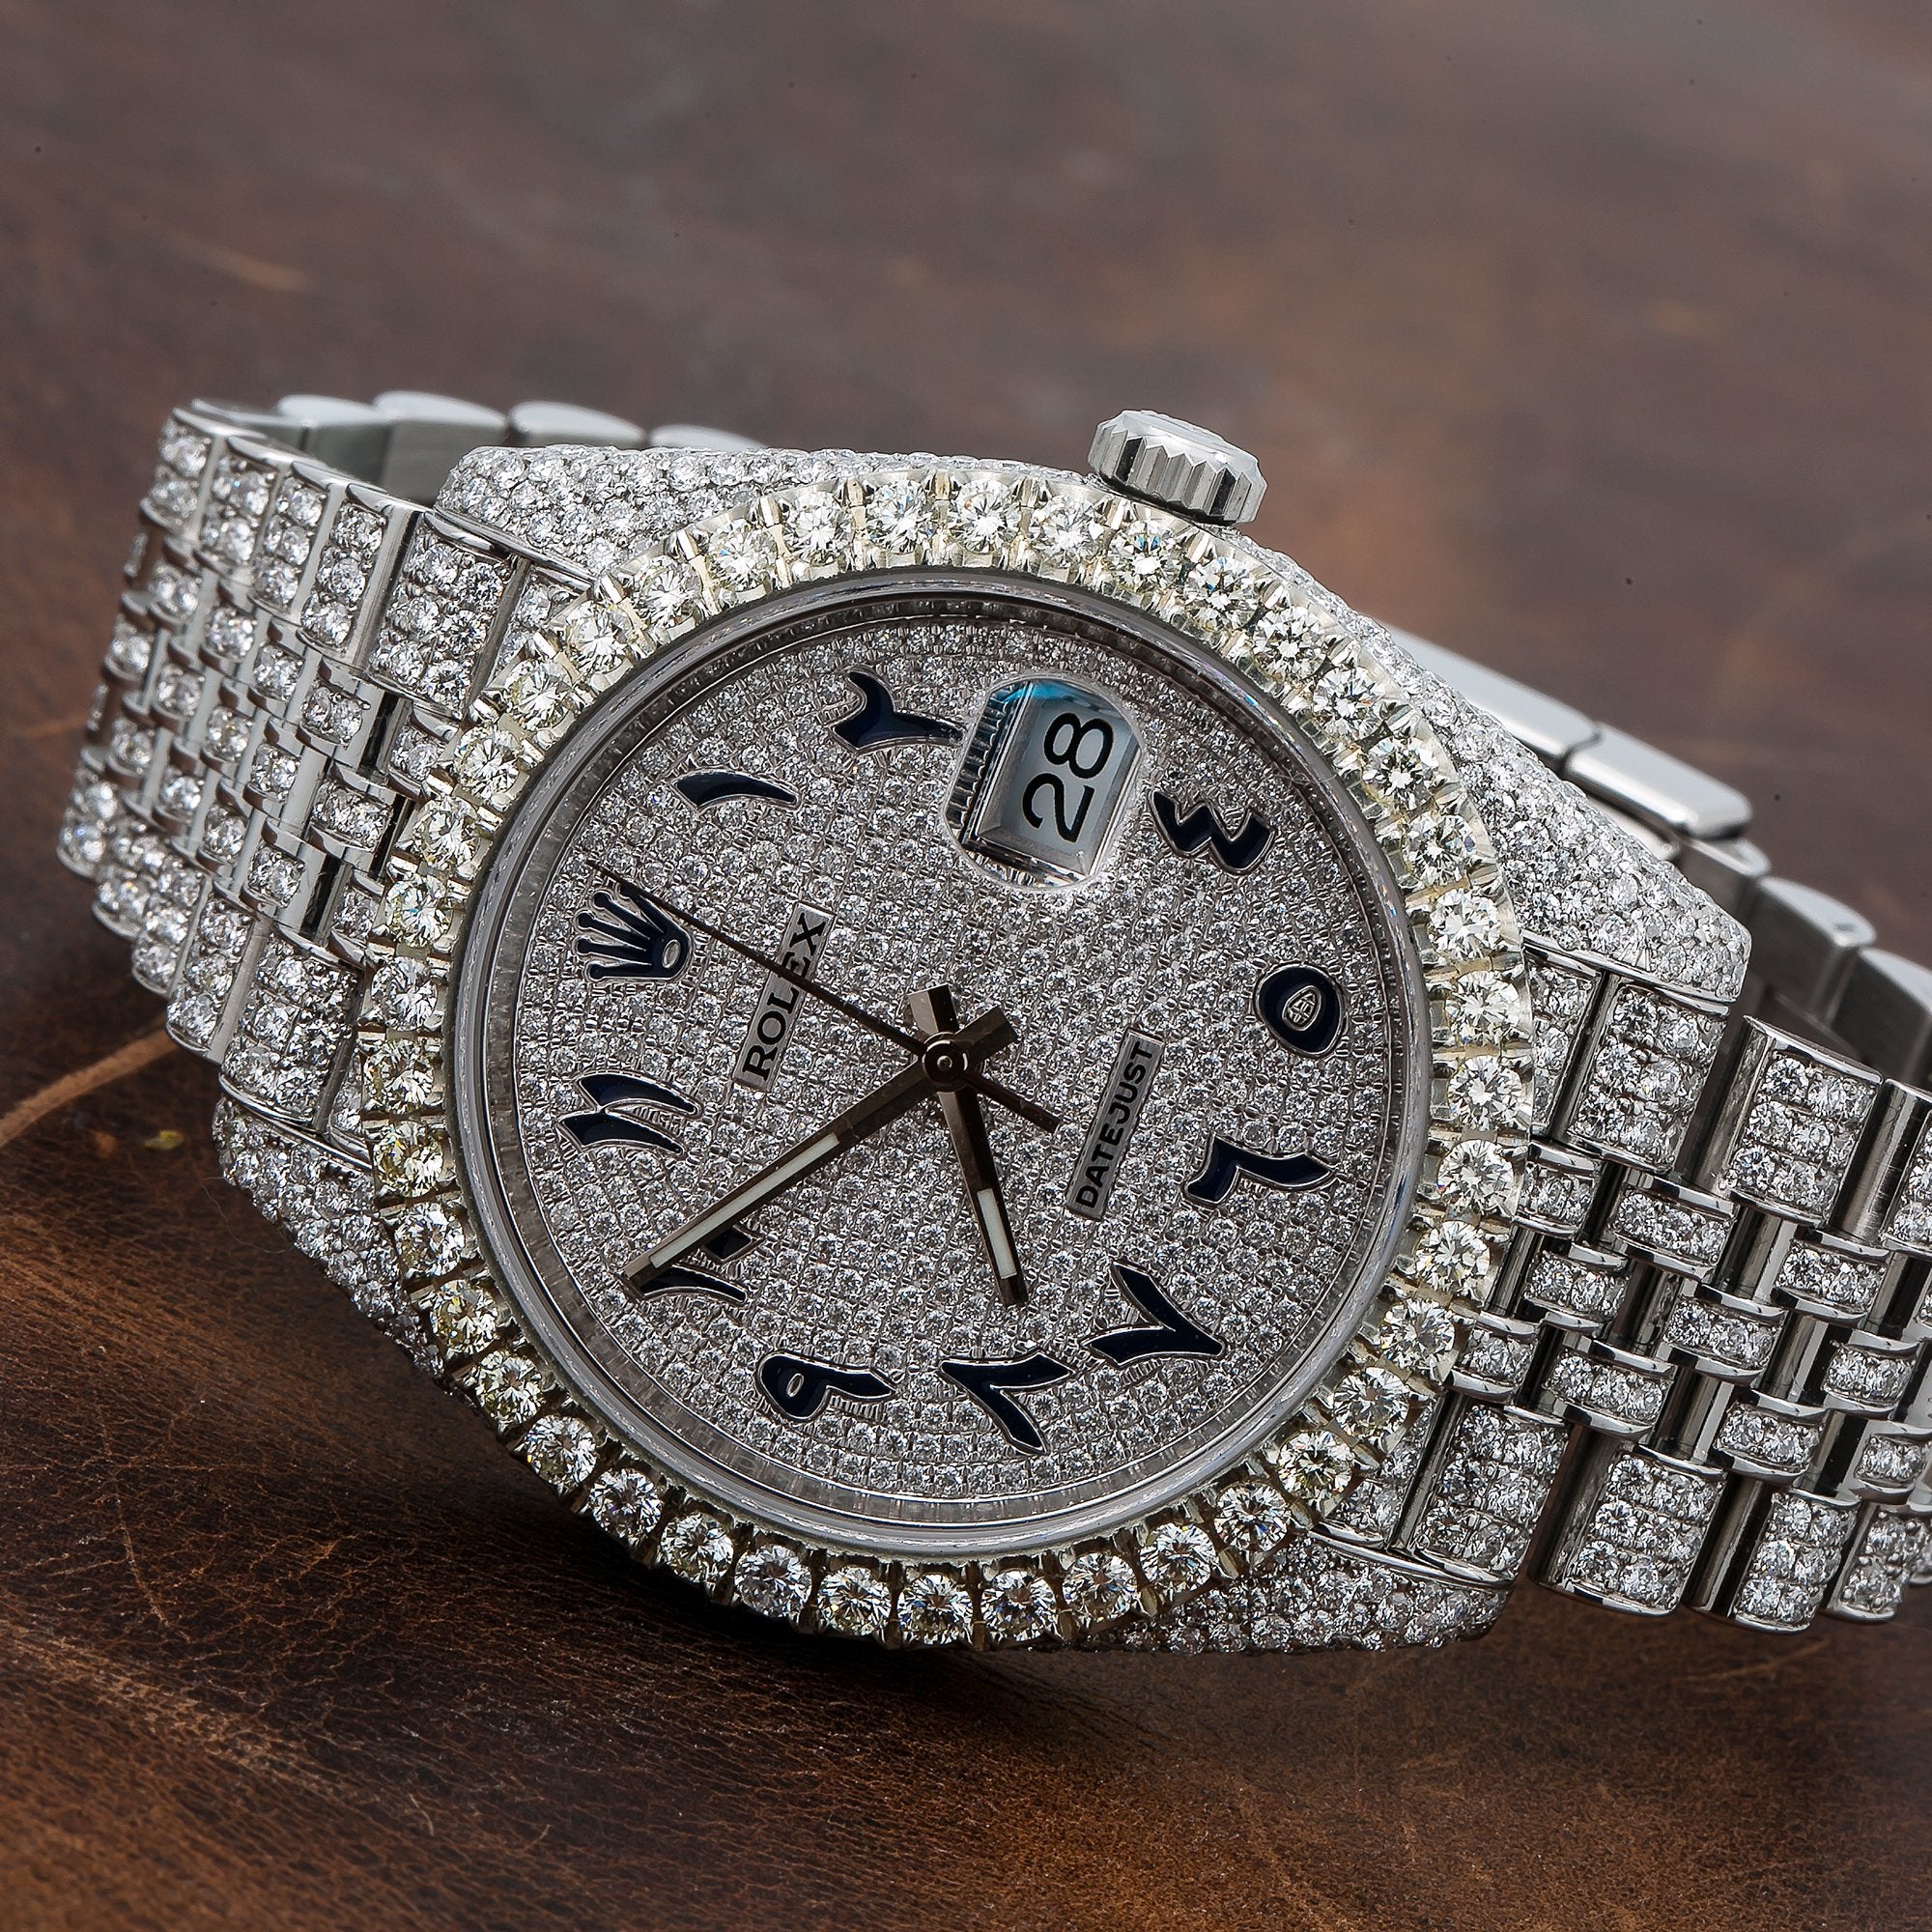 Rolex Datejust Diamond Watch, 126300 